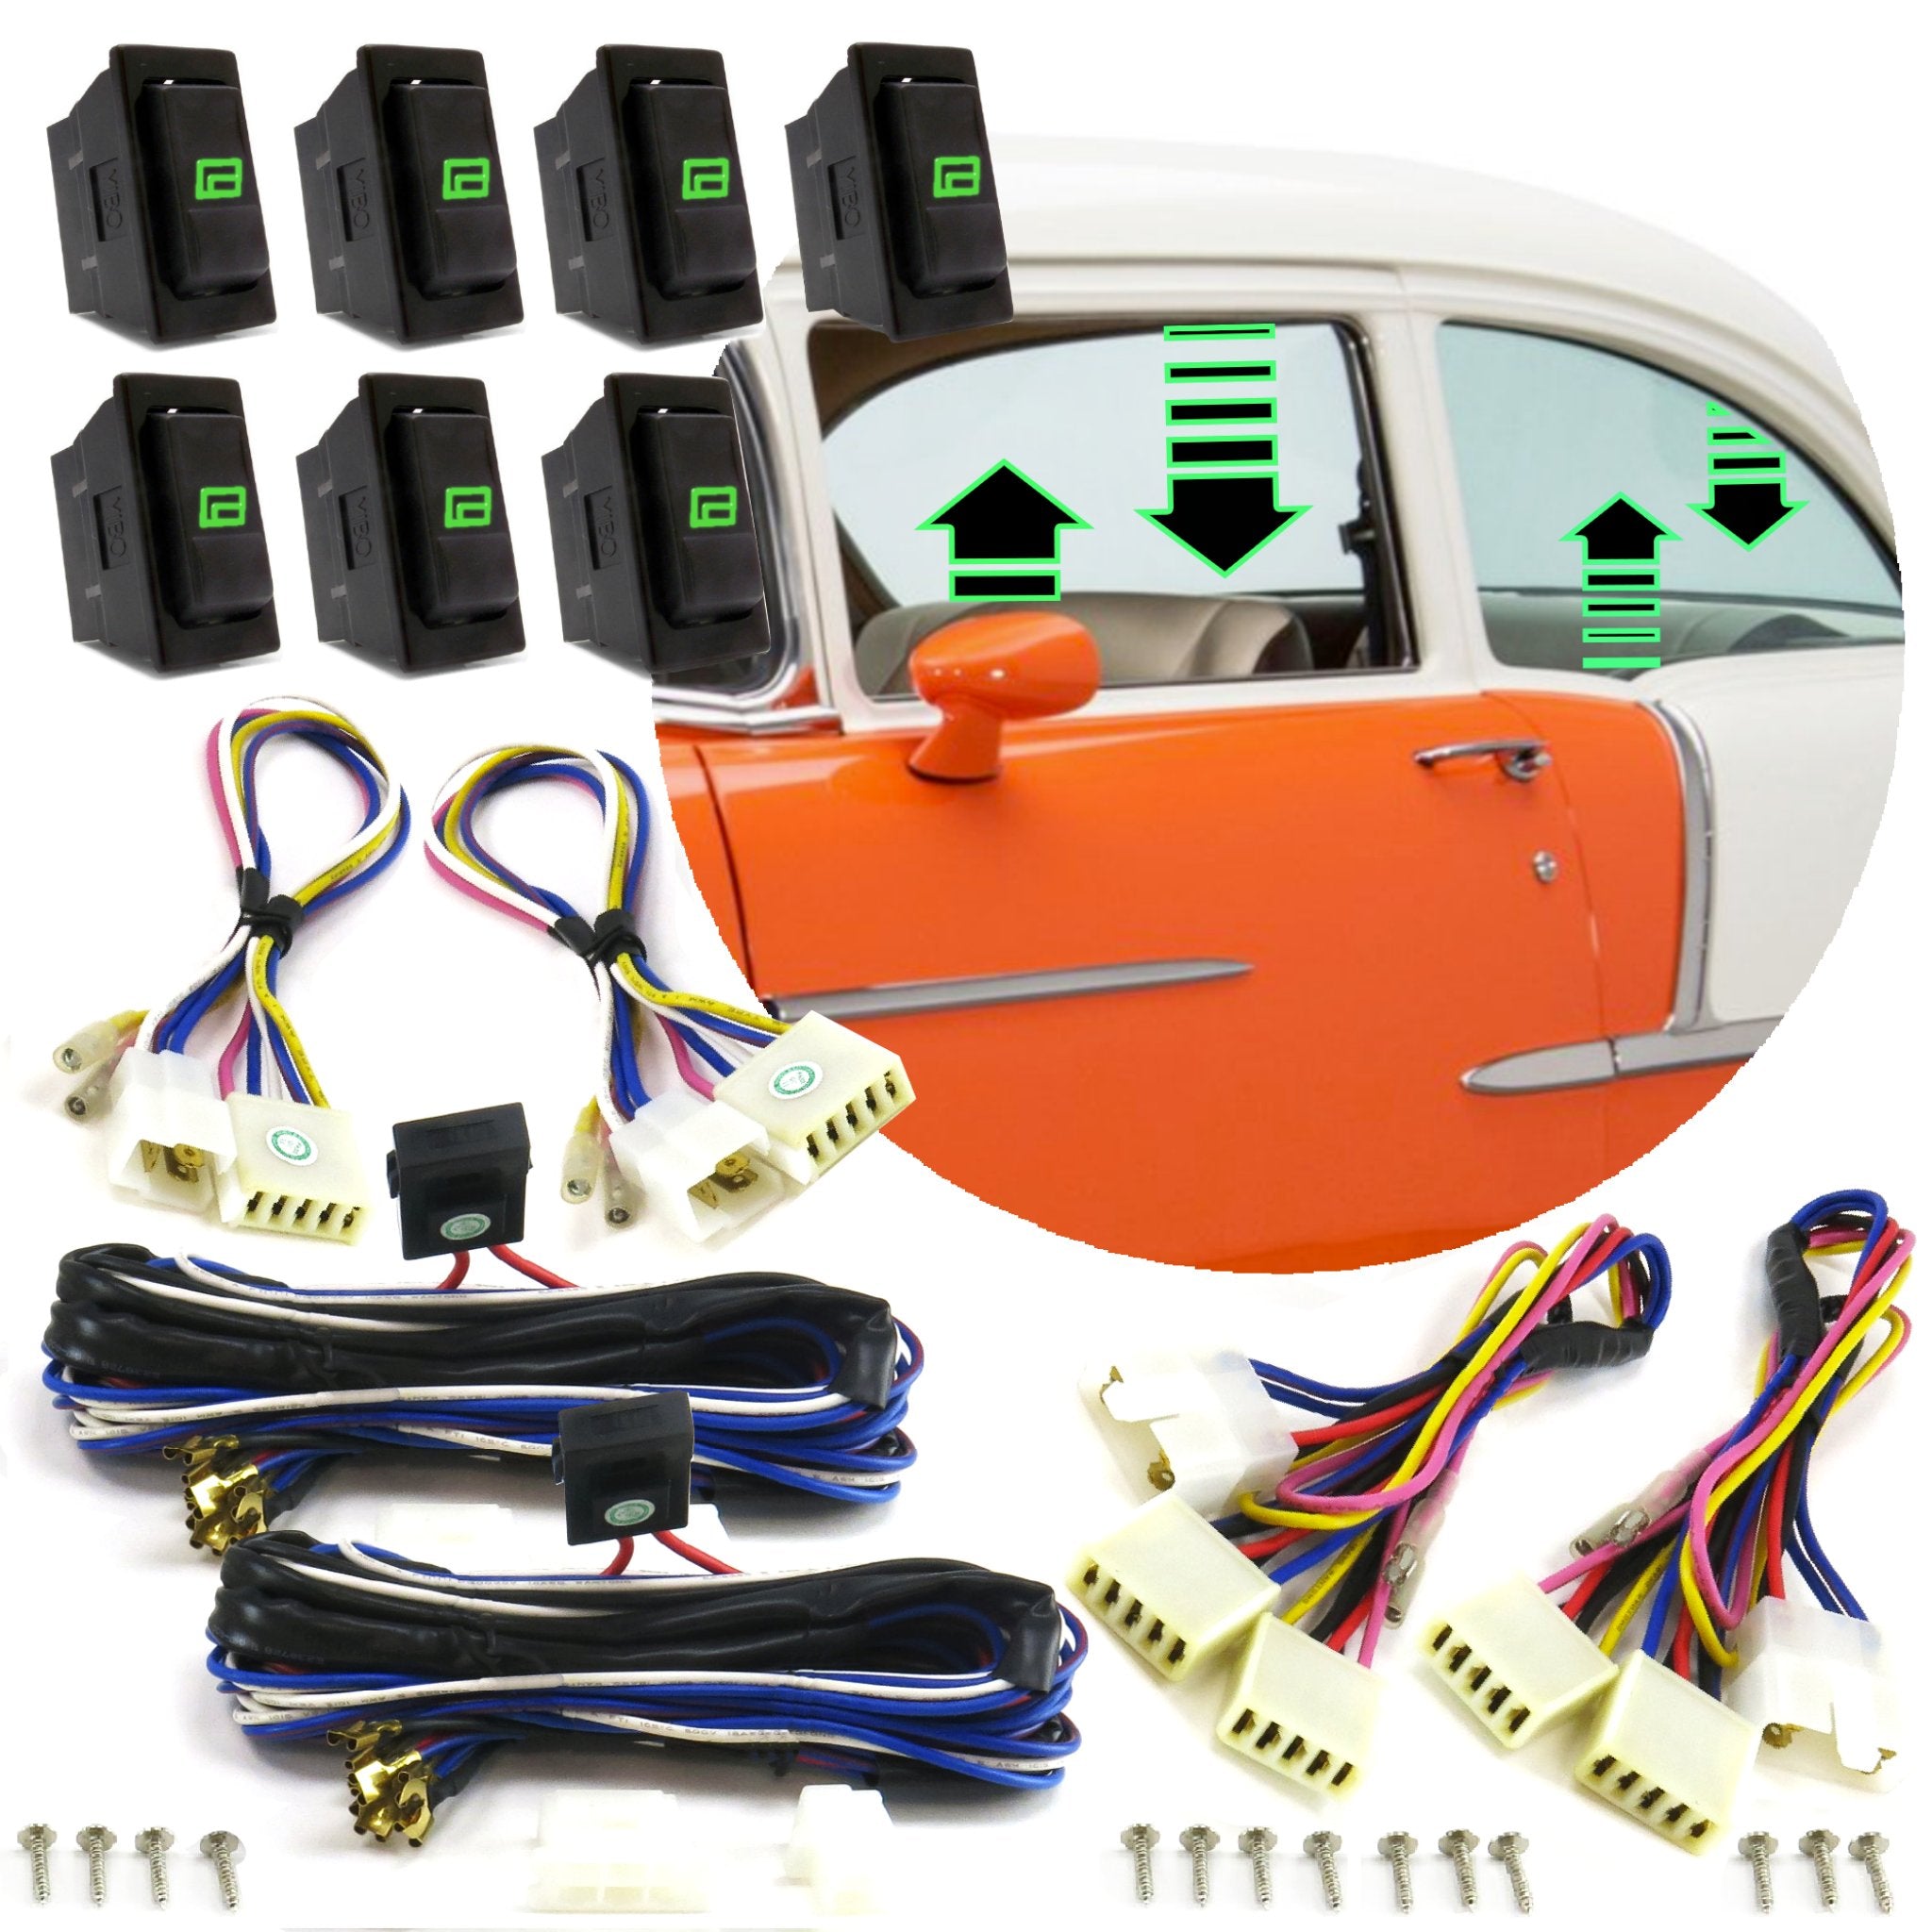 4 Door Car Power Window 7 Switch Kit w/ Green LED & Wiring Harness 12V Universal